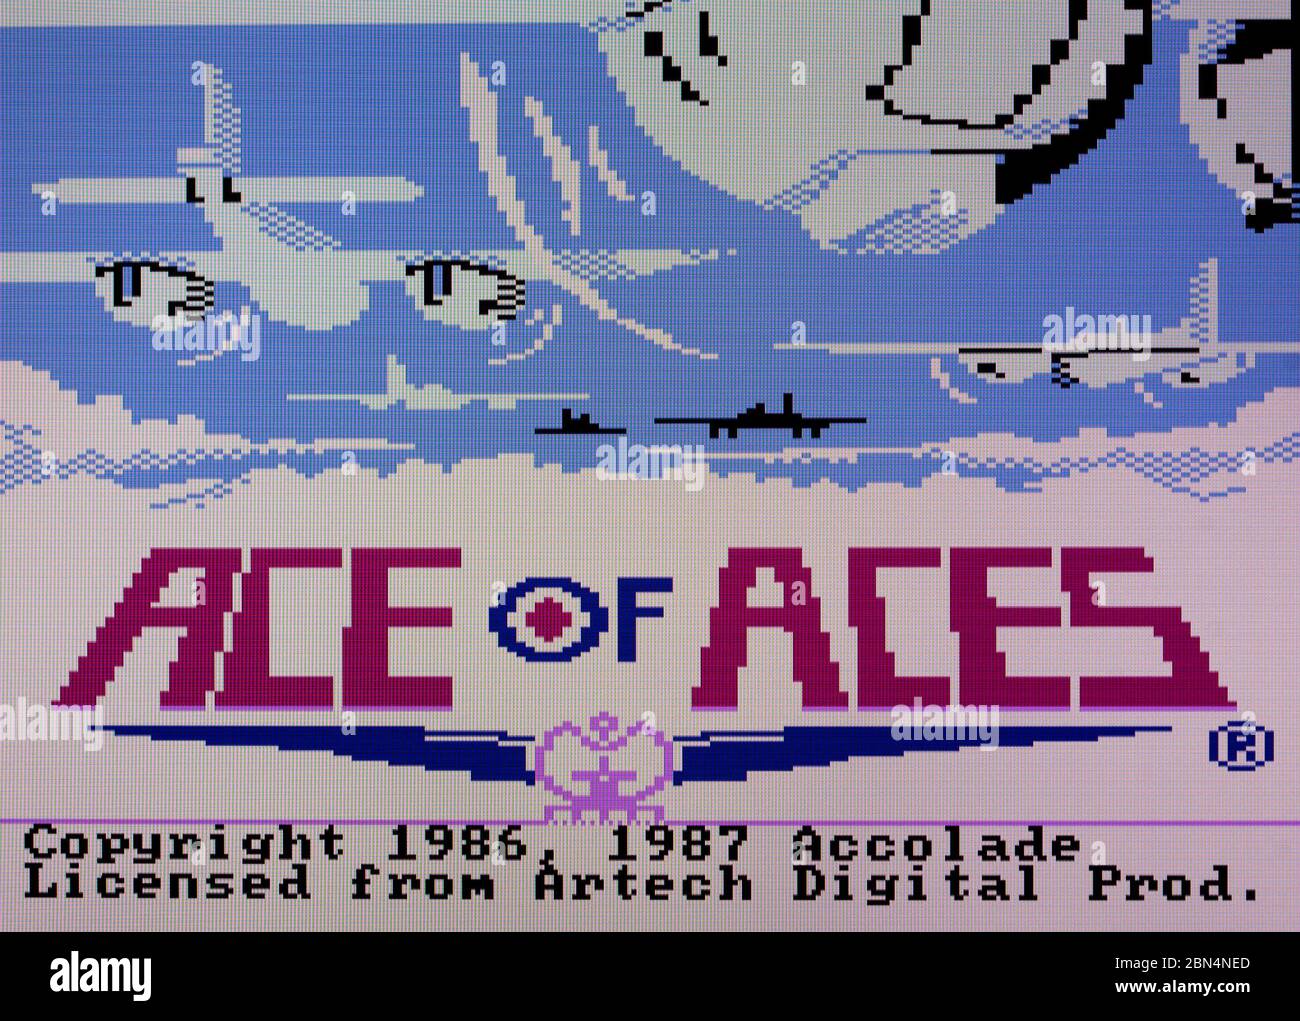 Ace of Aces - Atari 7800 Videgame Stock Photo